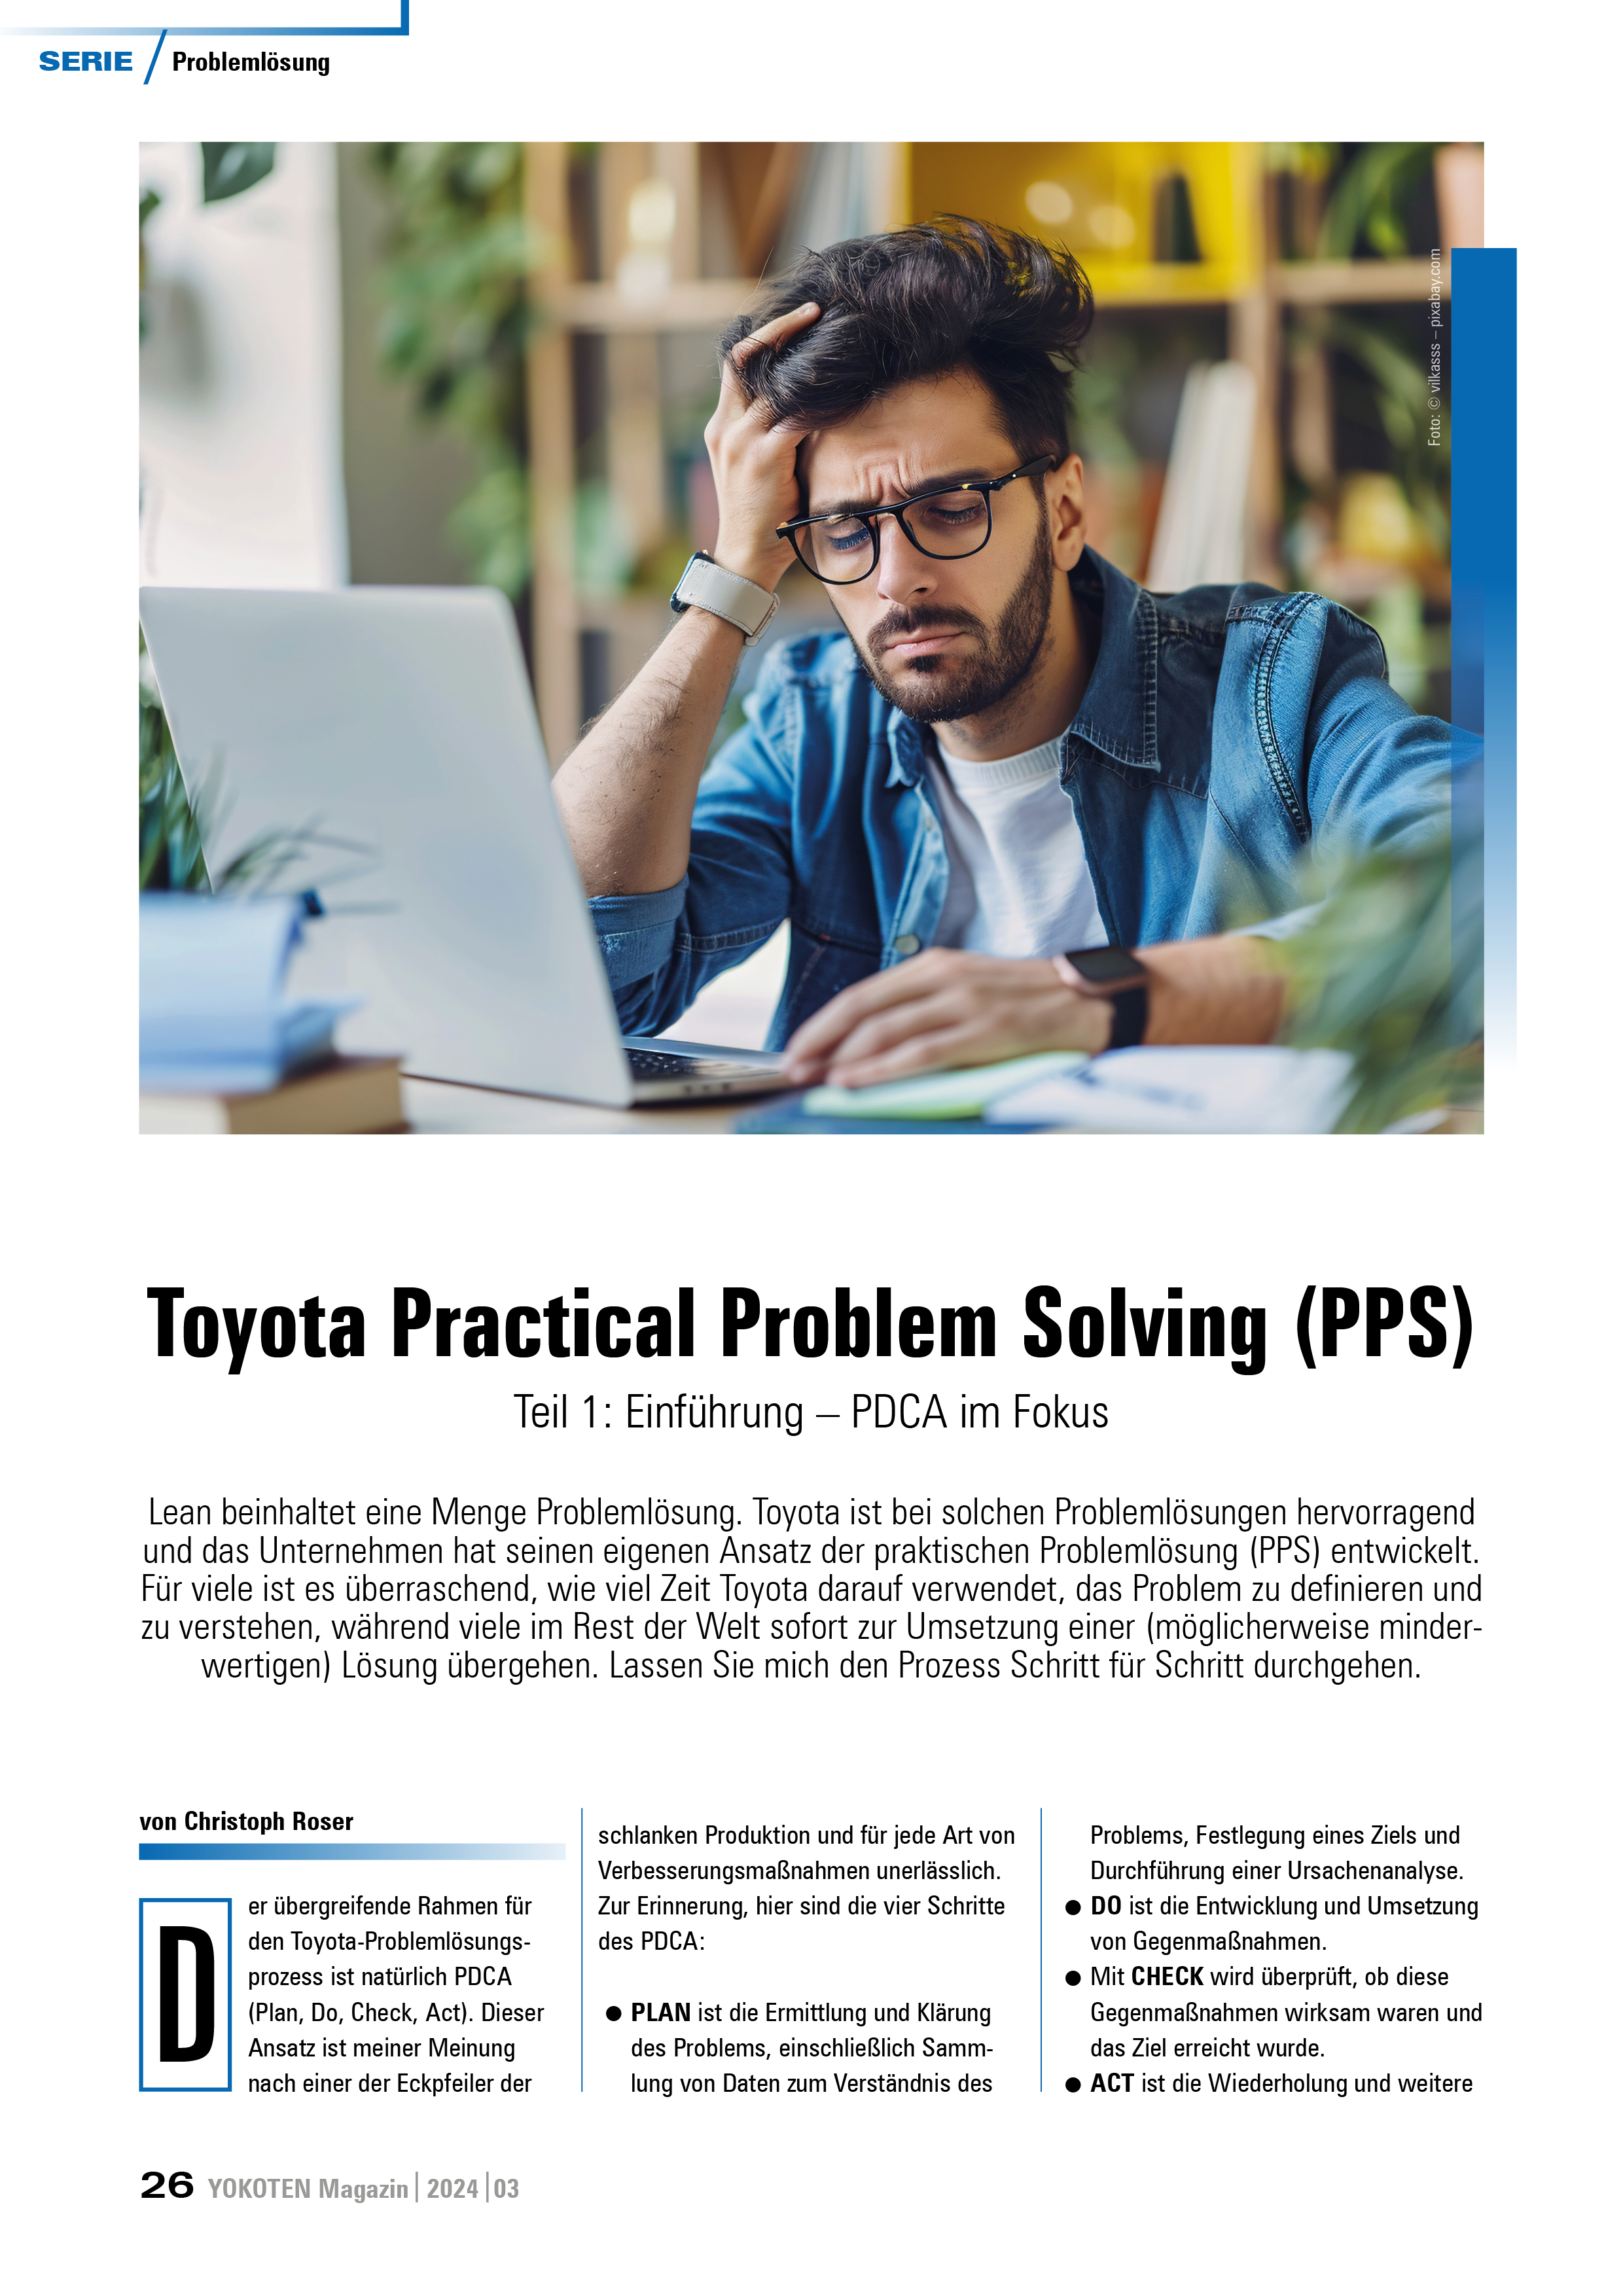 Toyota Practical Problem Solving (PPS) - Artikel aus Fachmagazin YOKOTEN 2024-03